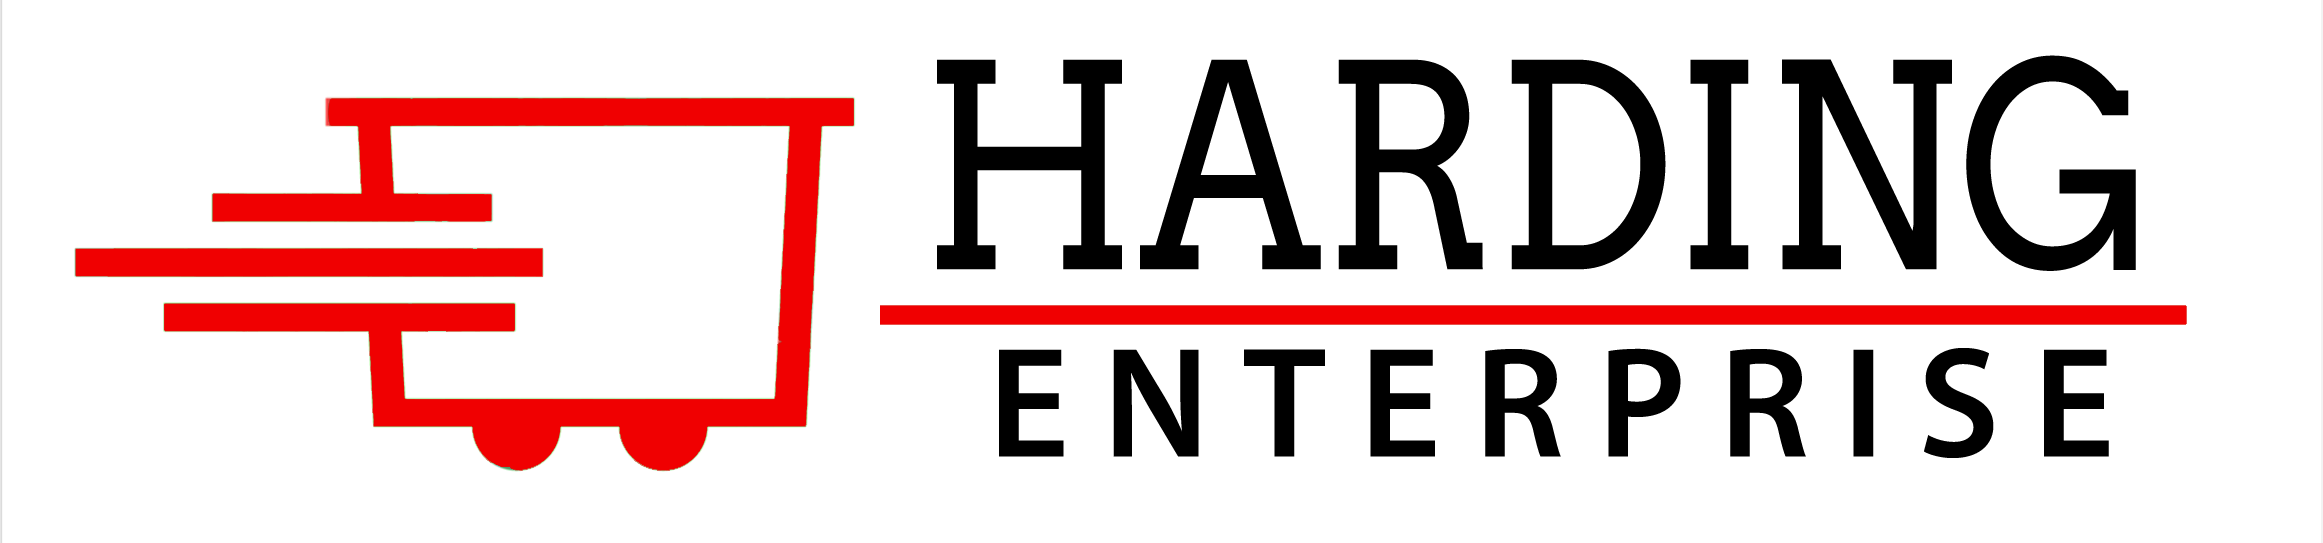 Harding Enterprise